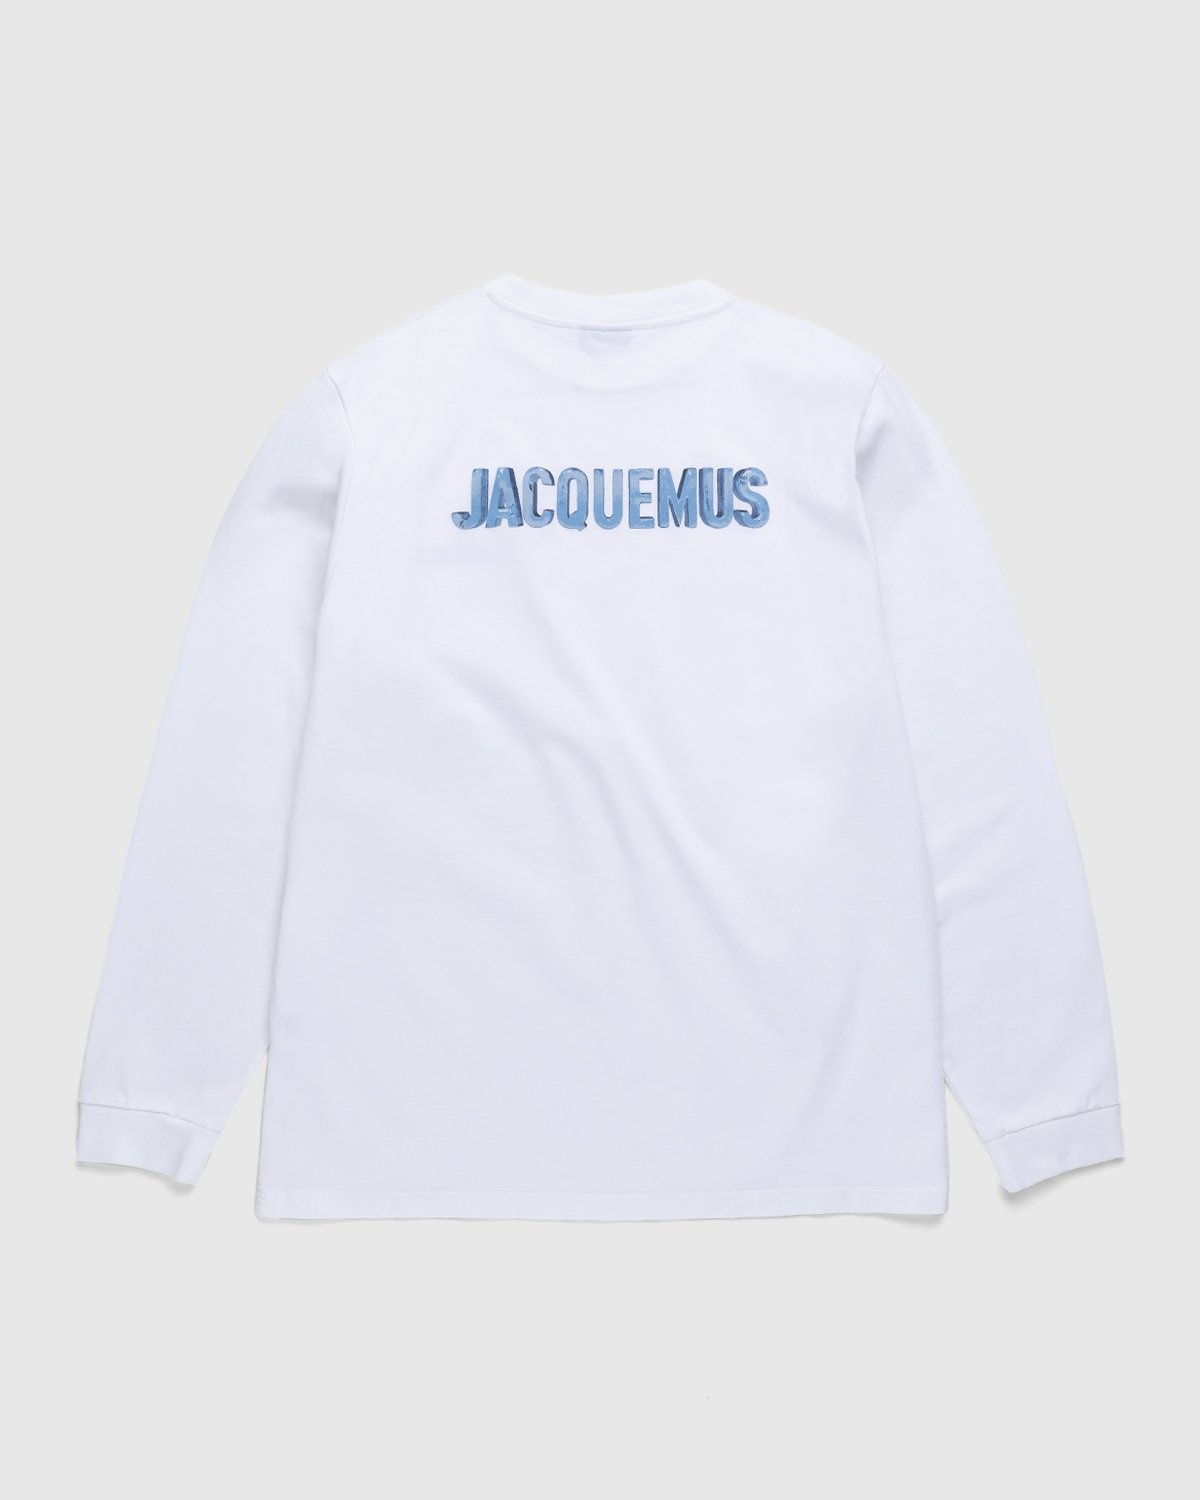 JACQUEMUS – Le T-Shirt Gelo Print Ice Jacquemus White - Tops - White - Image 2